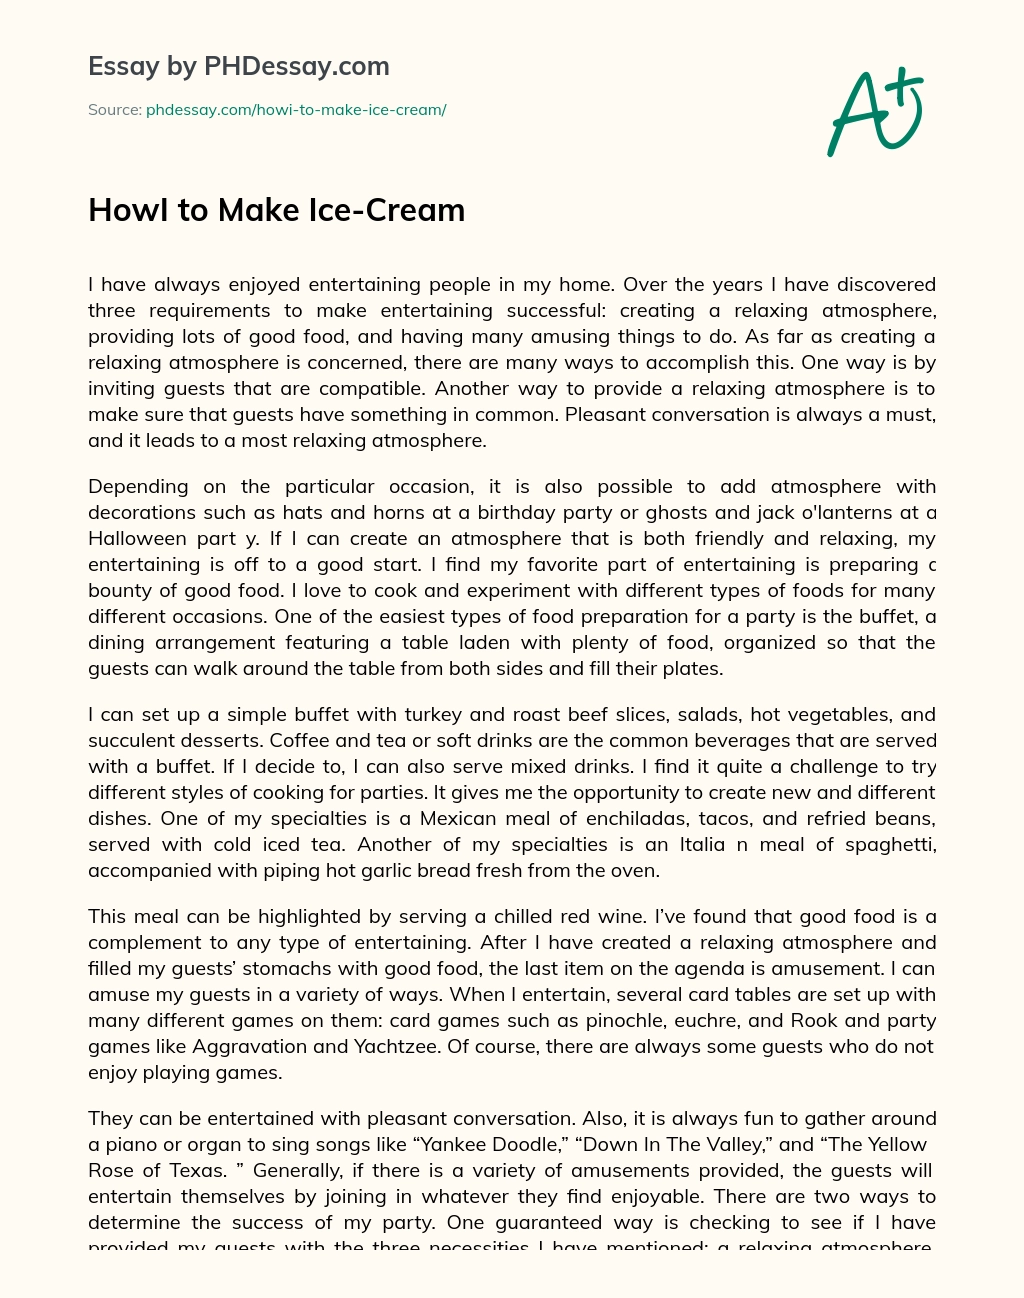 HowI to Make Ice-Cream essay